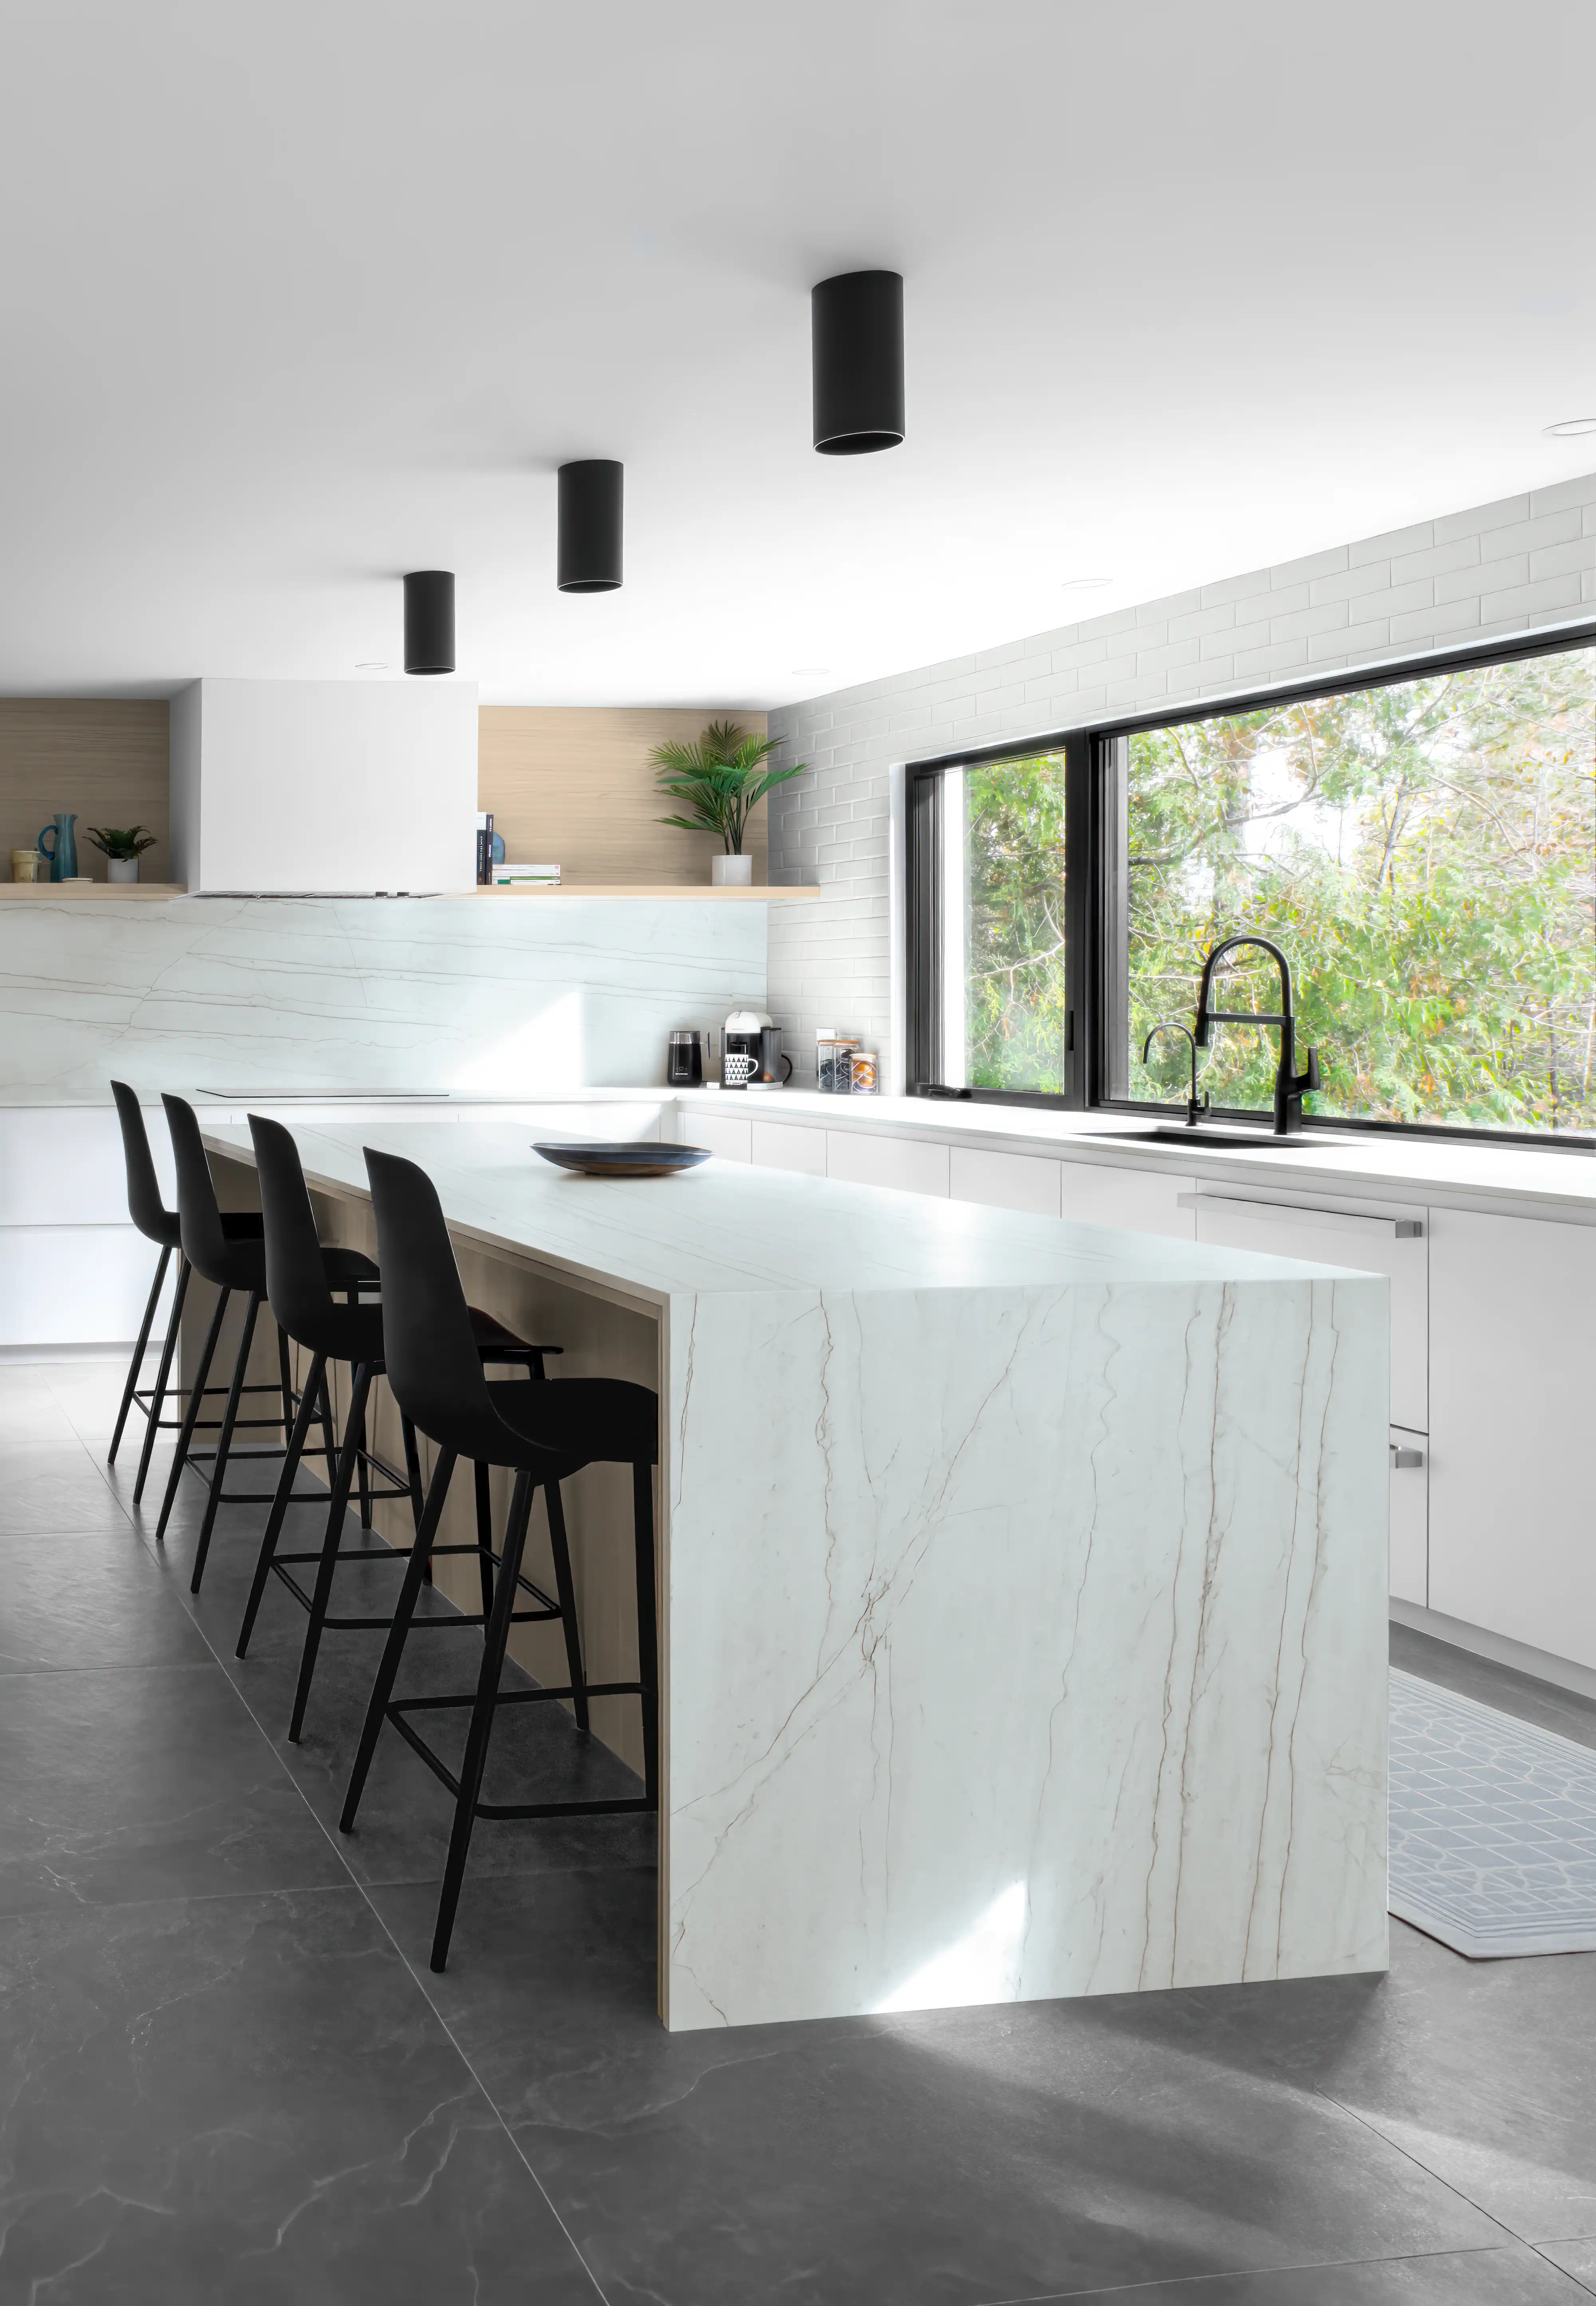 Modern kitchen with marble island, black bar stools, and sleek pendant lighting, interior by Sarah Brown Design